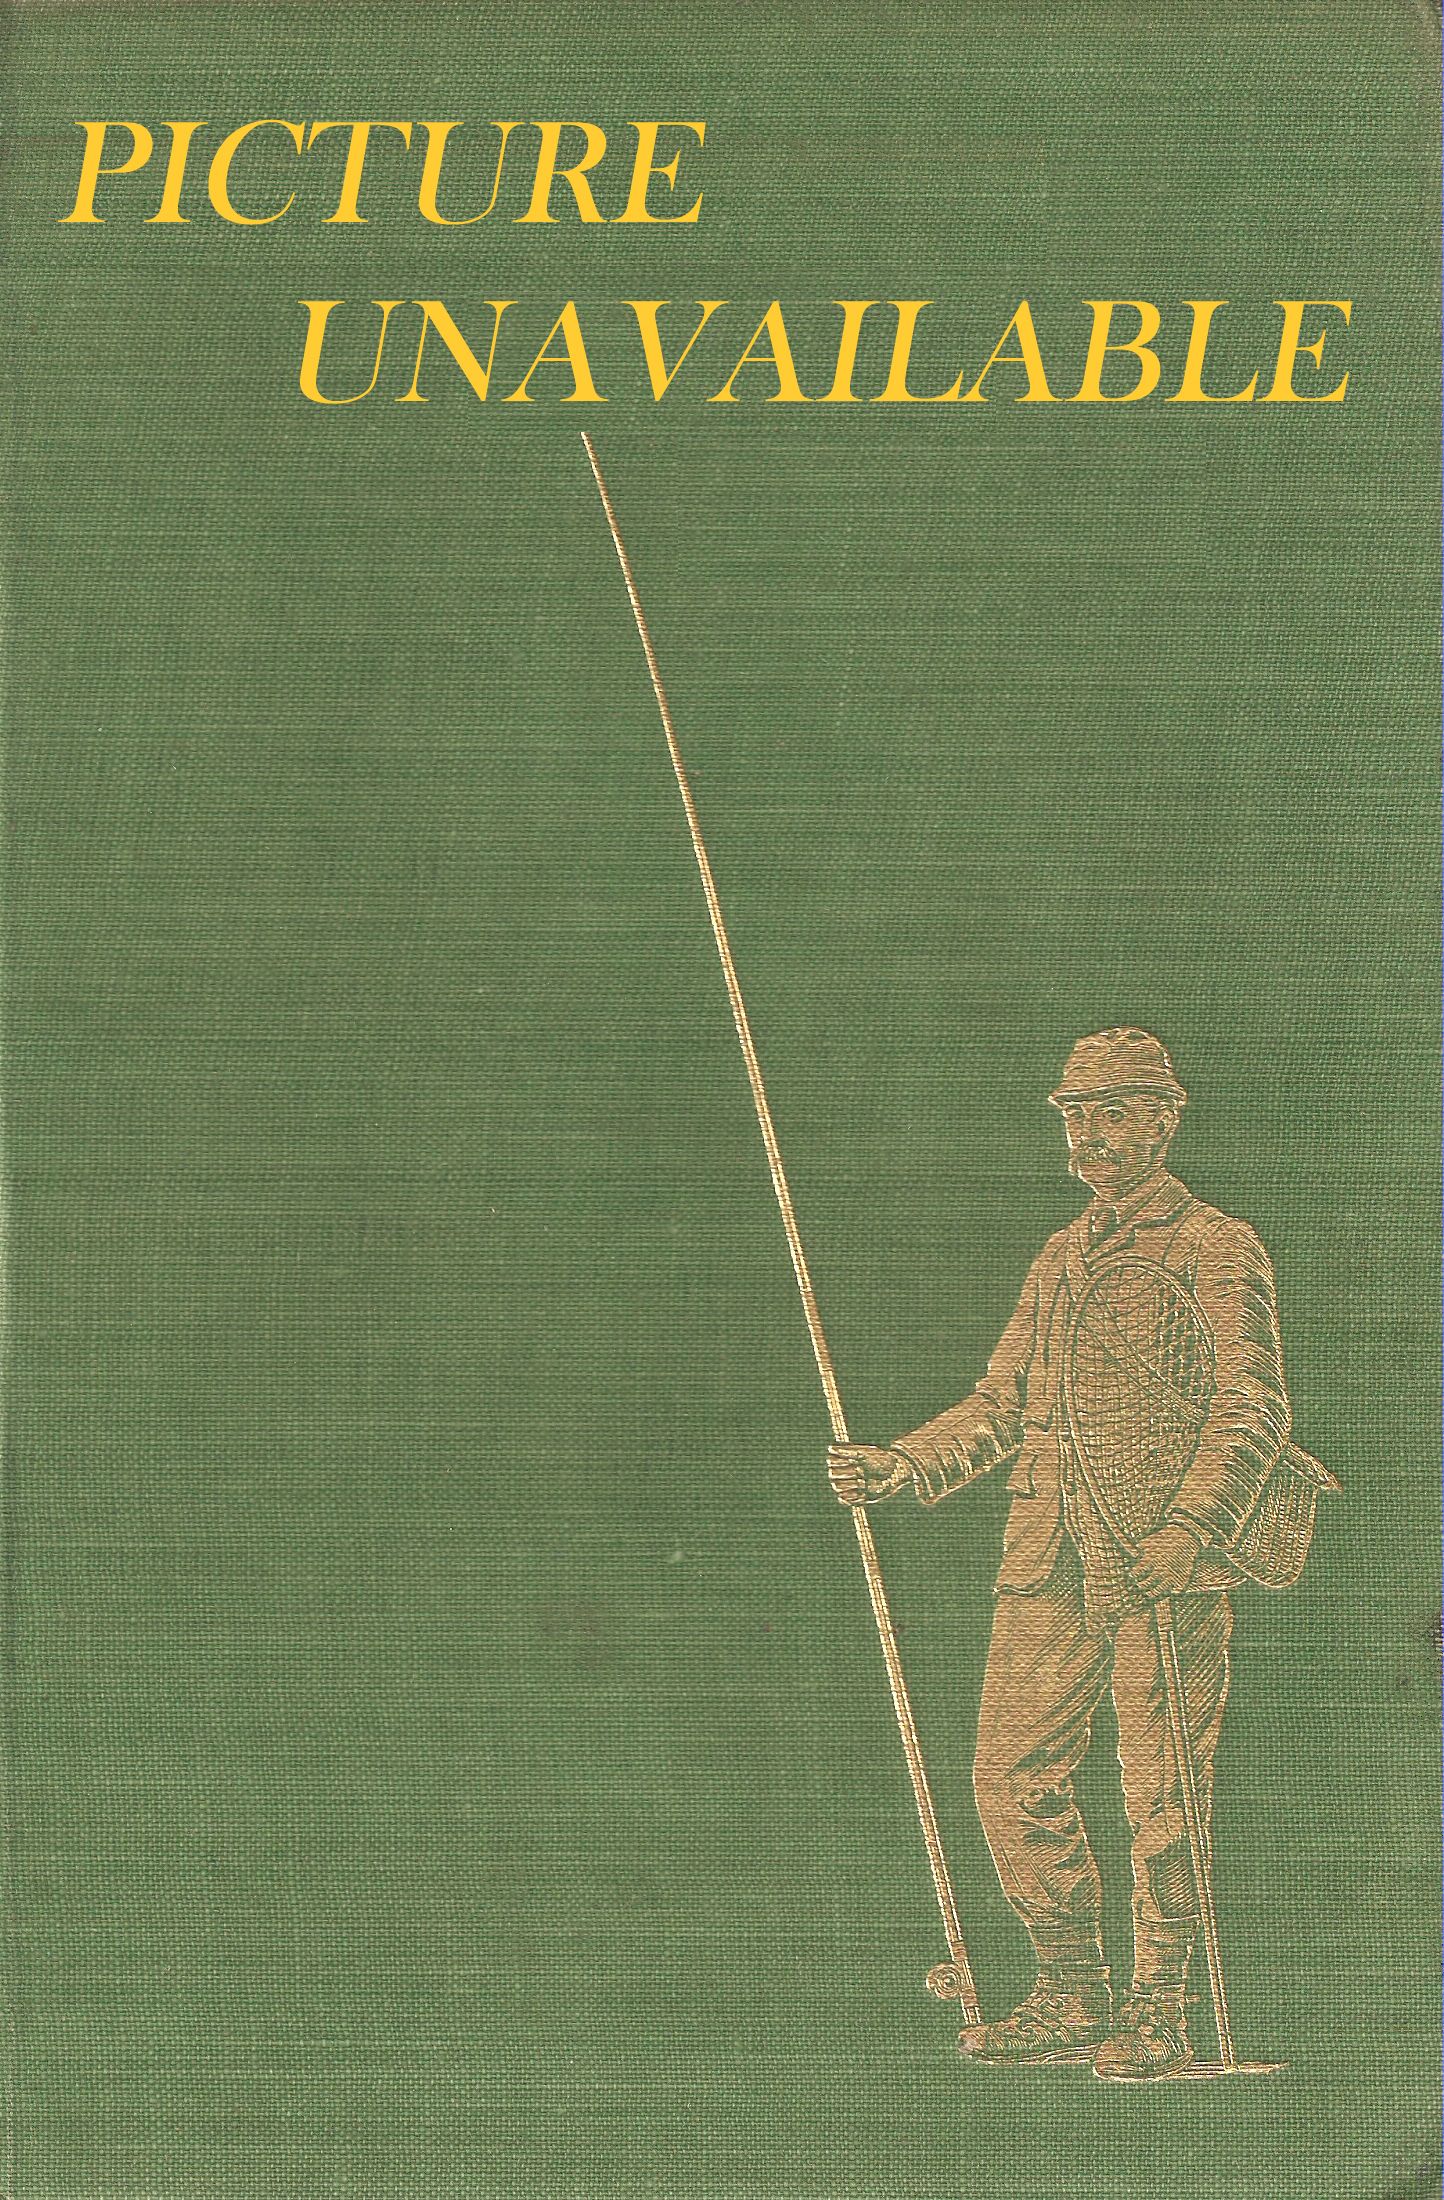 CREEL: A FISHING MAGAZINE. Volume 1, number 3. September 1963.